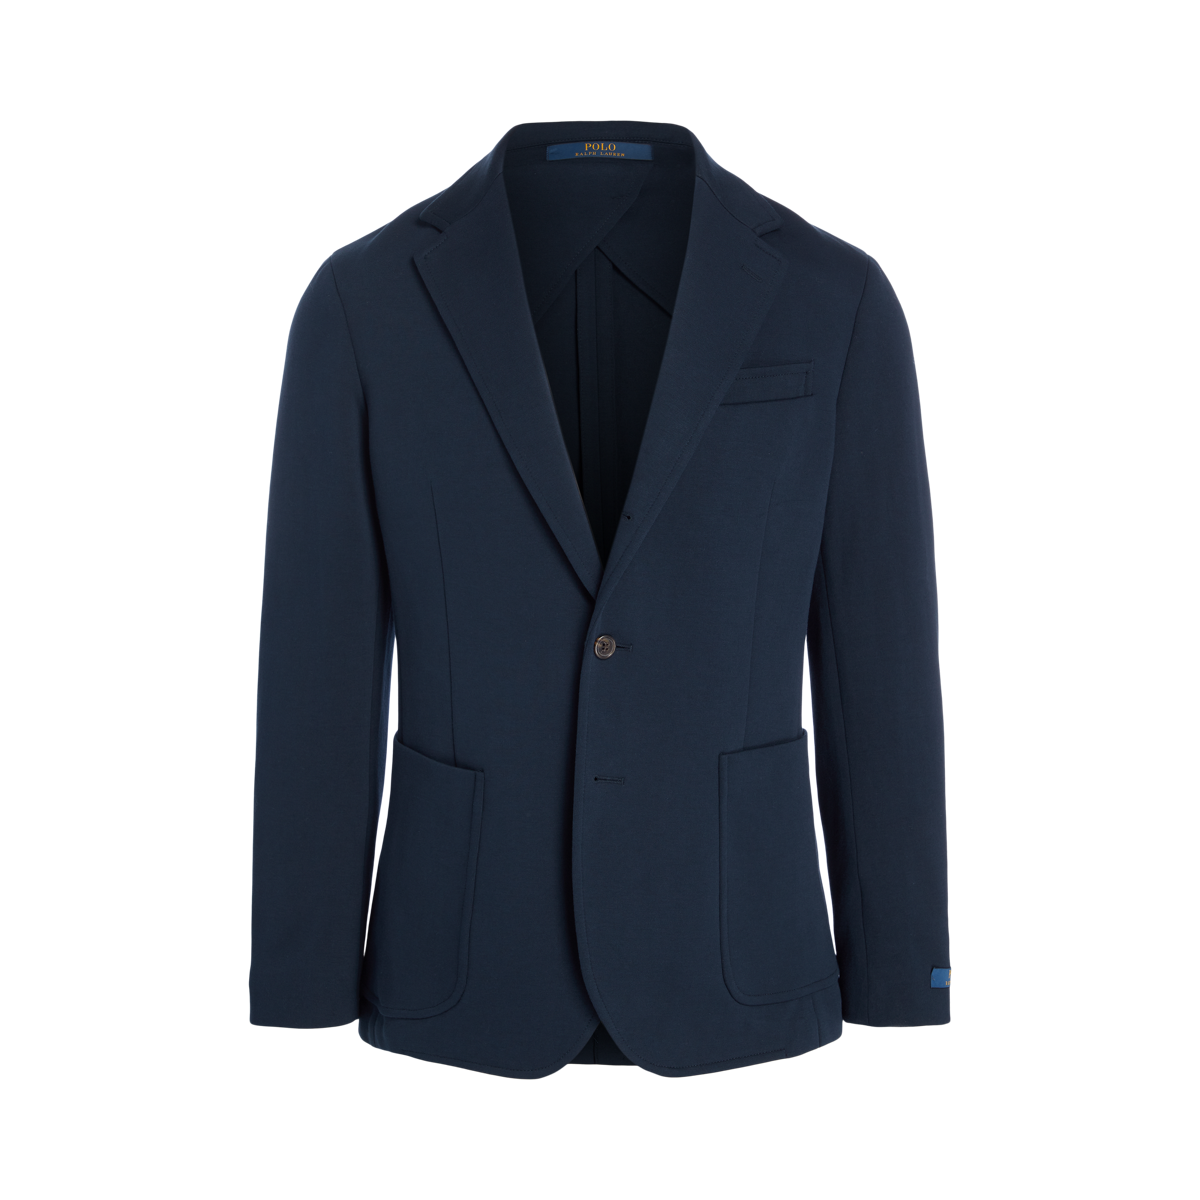 Polo Ralph Lauren Double-Knit Suit Jacket, Mens, M, Aviator Navy